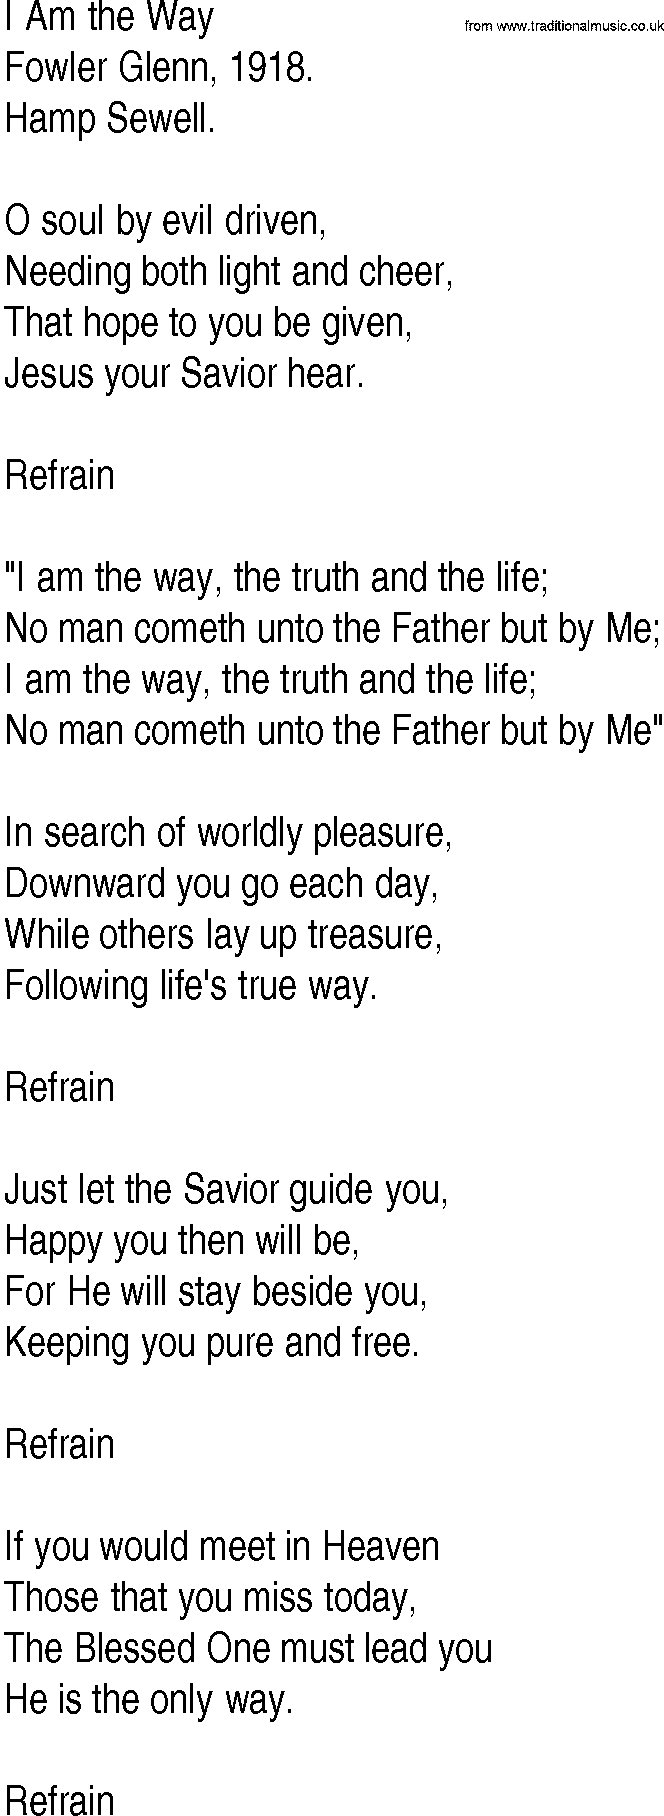 Hymn and Gospel Song: I Am the Way by Fowler Glenn lyrics